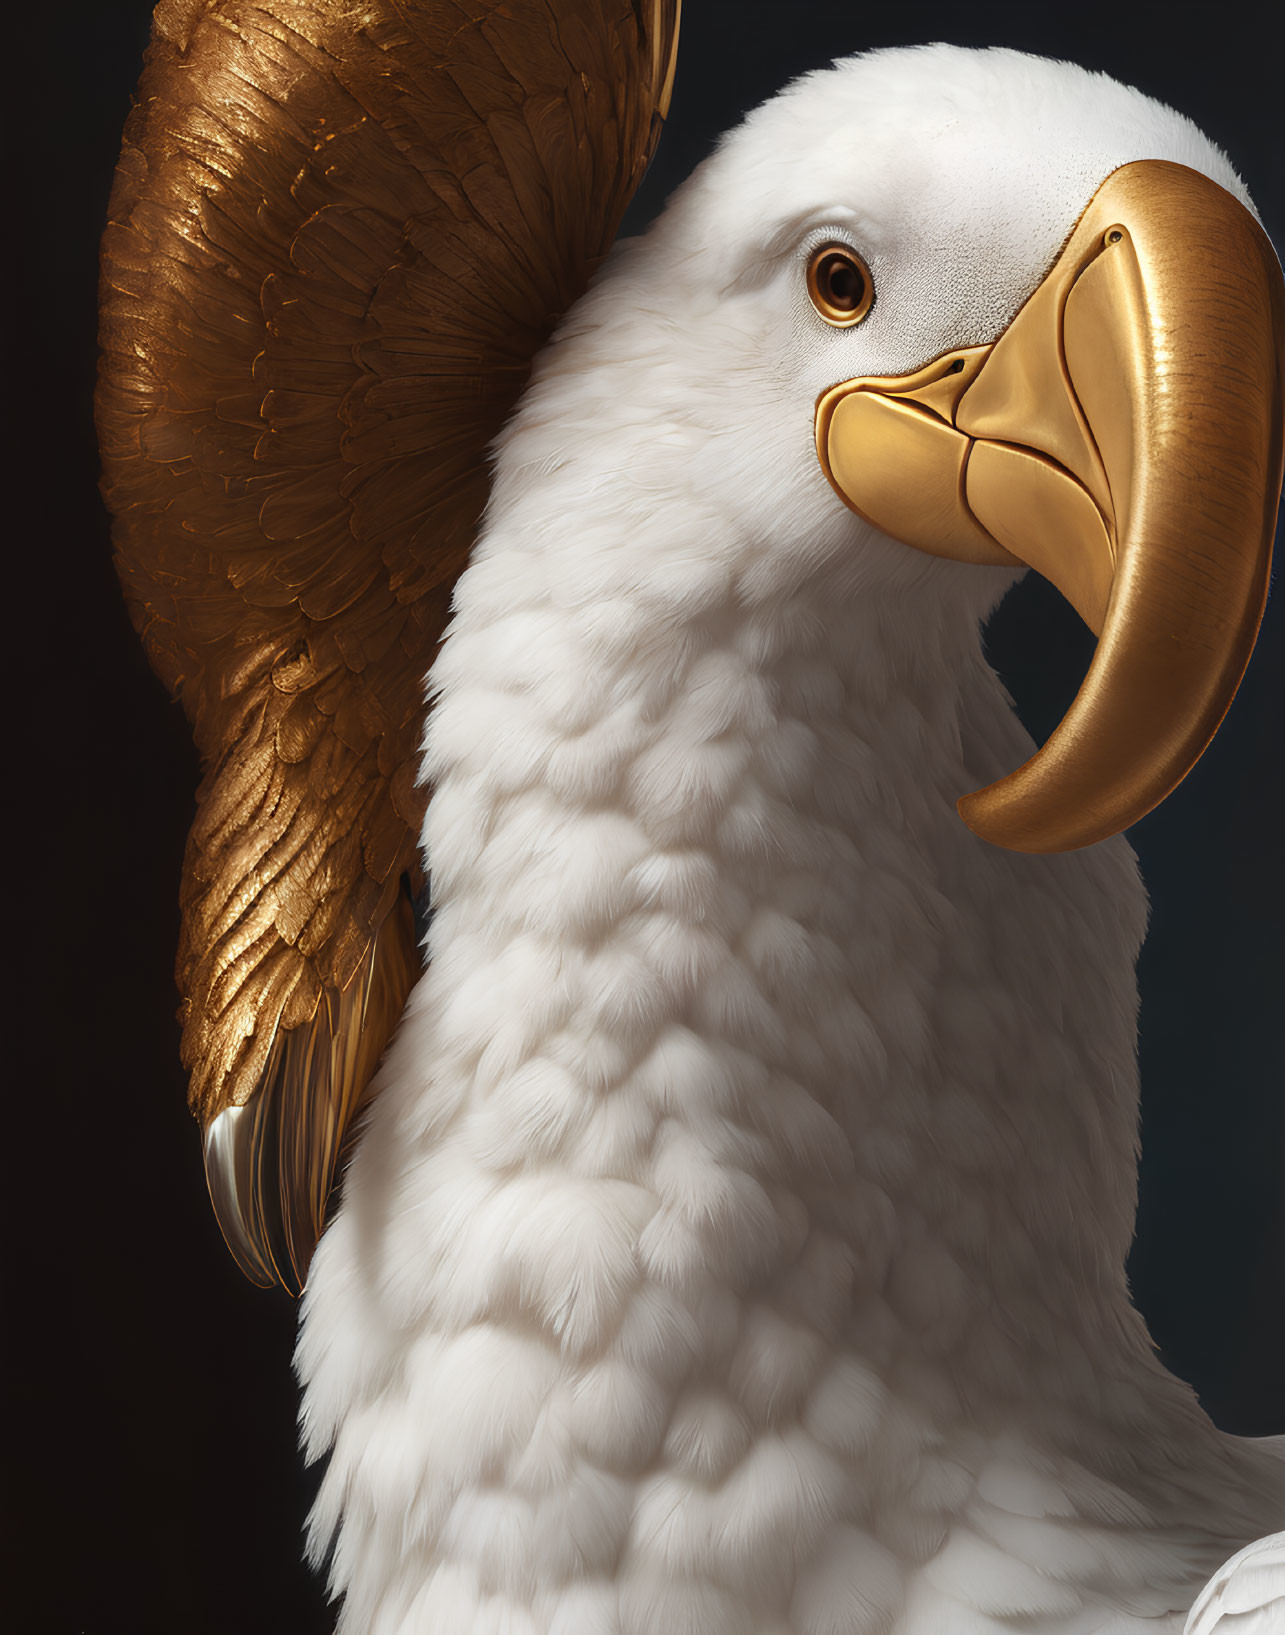 Fantastical eagle-like creature with golden beak on dark background